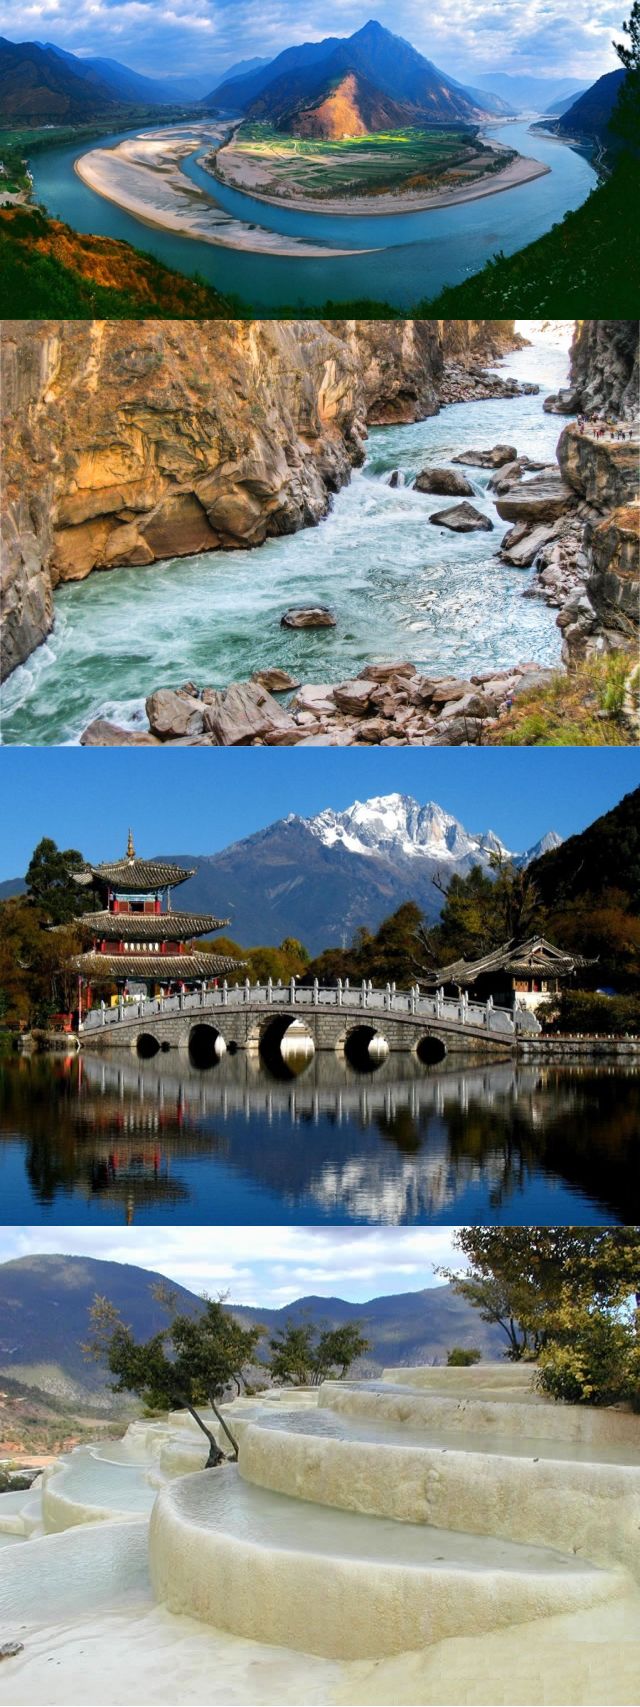 Lijiang Dali Kunming Tour